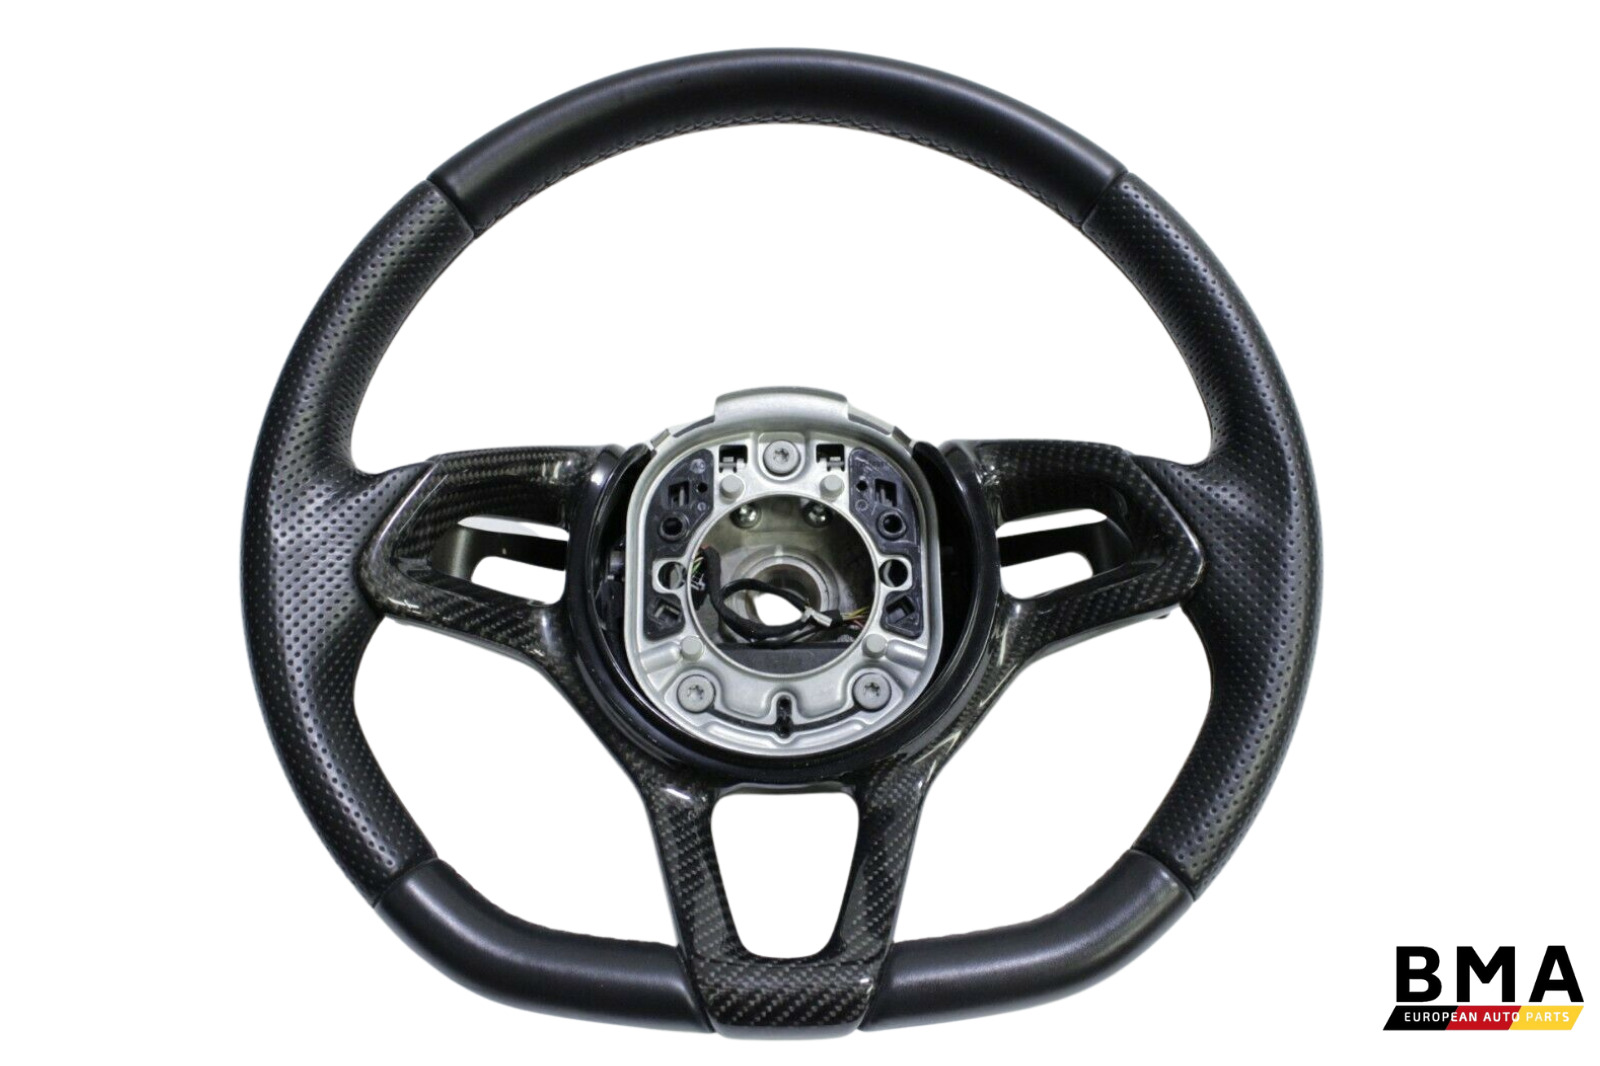 McLaren MP4-12C 650S 570S Leather Steering Wheel with Carbon Fiber Trim Oem